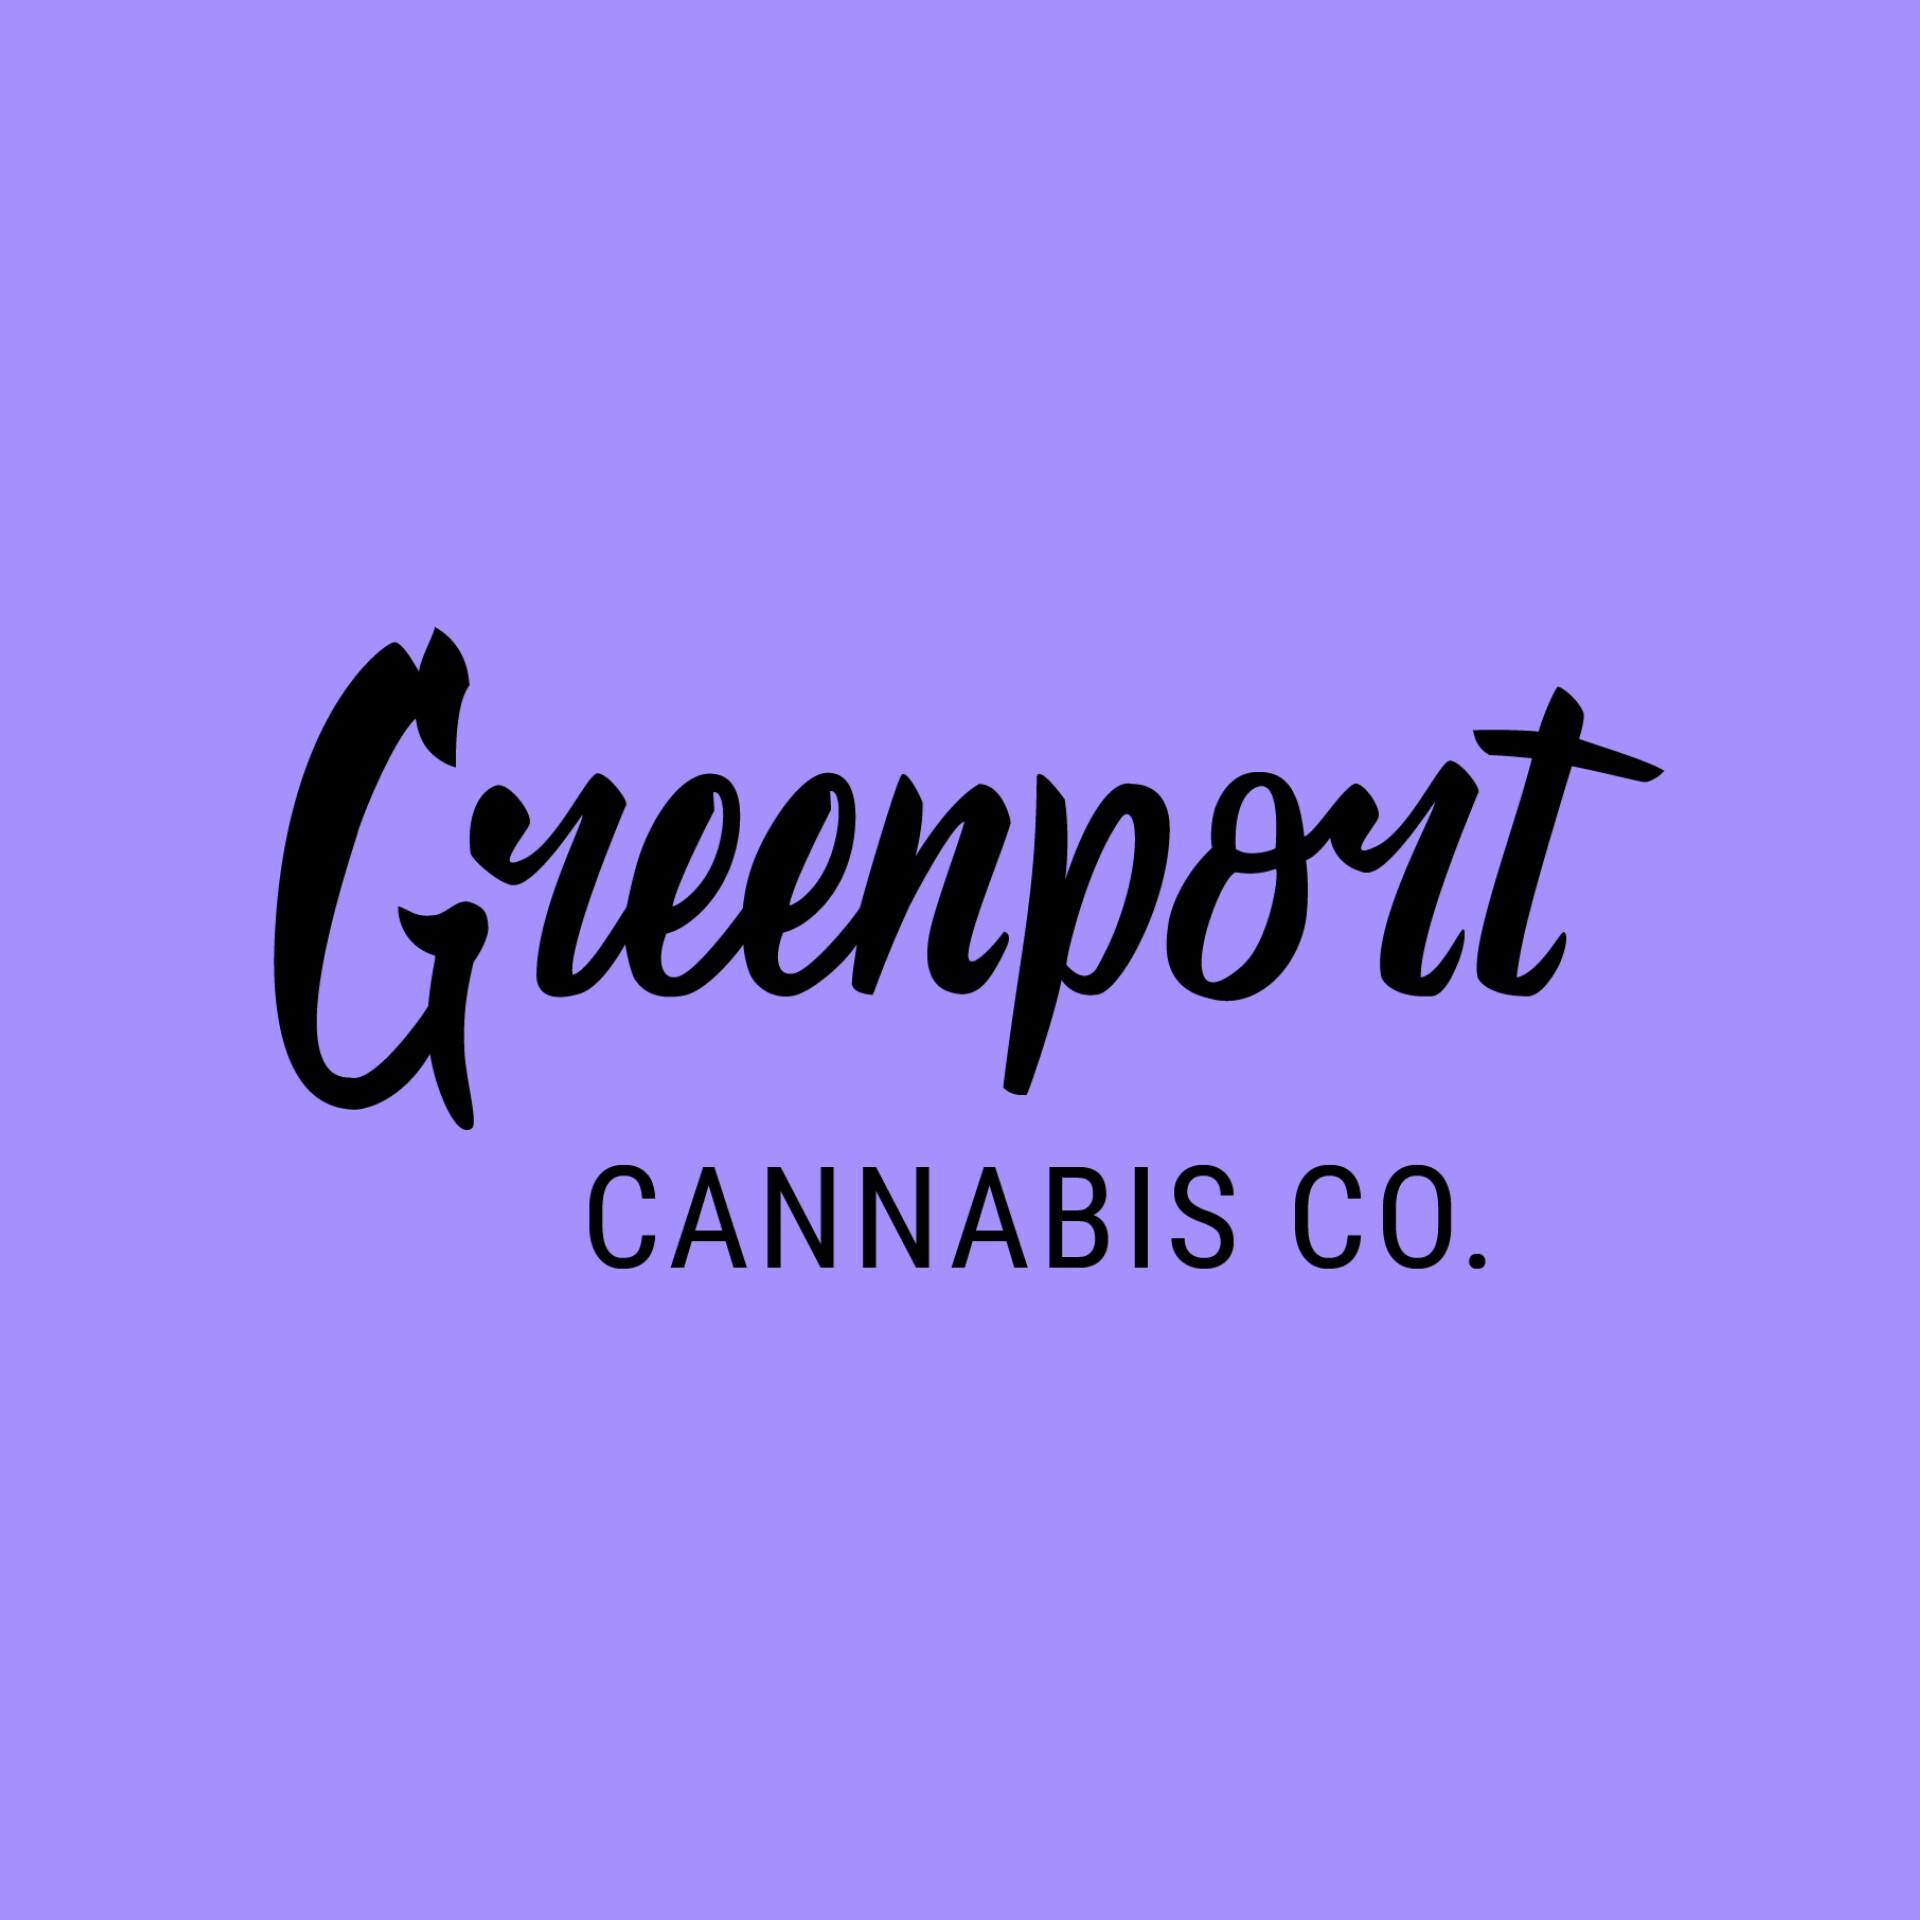 Greenport Cannabis Co logo